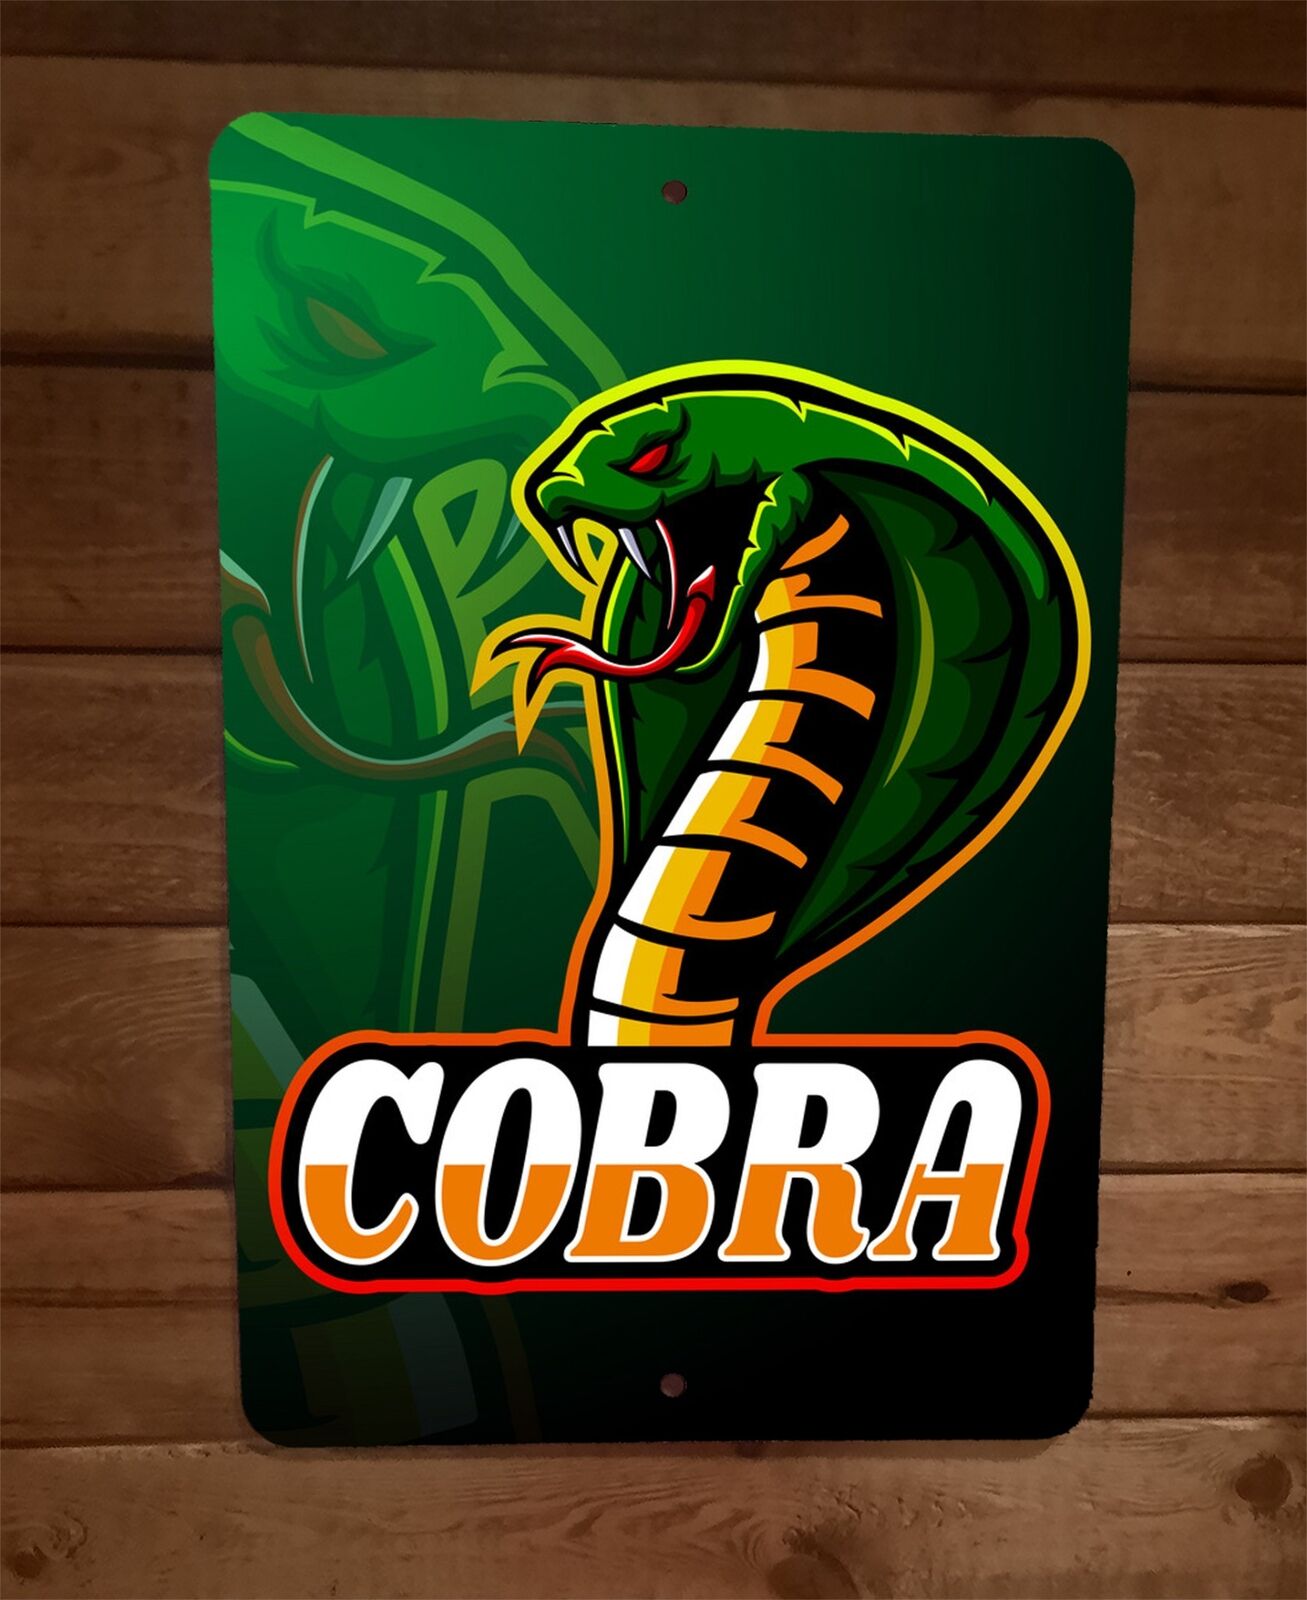 Cobra Snake Art Car Garage Poster Shelby 8x12 Metal Wall Sign Poster